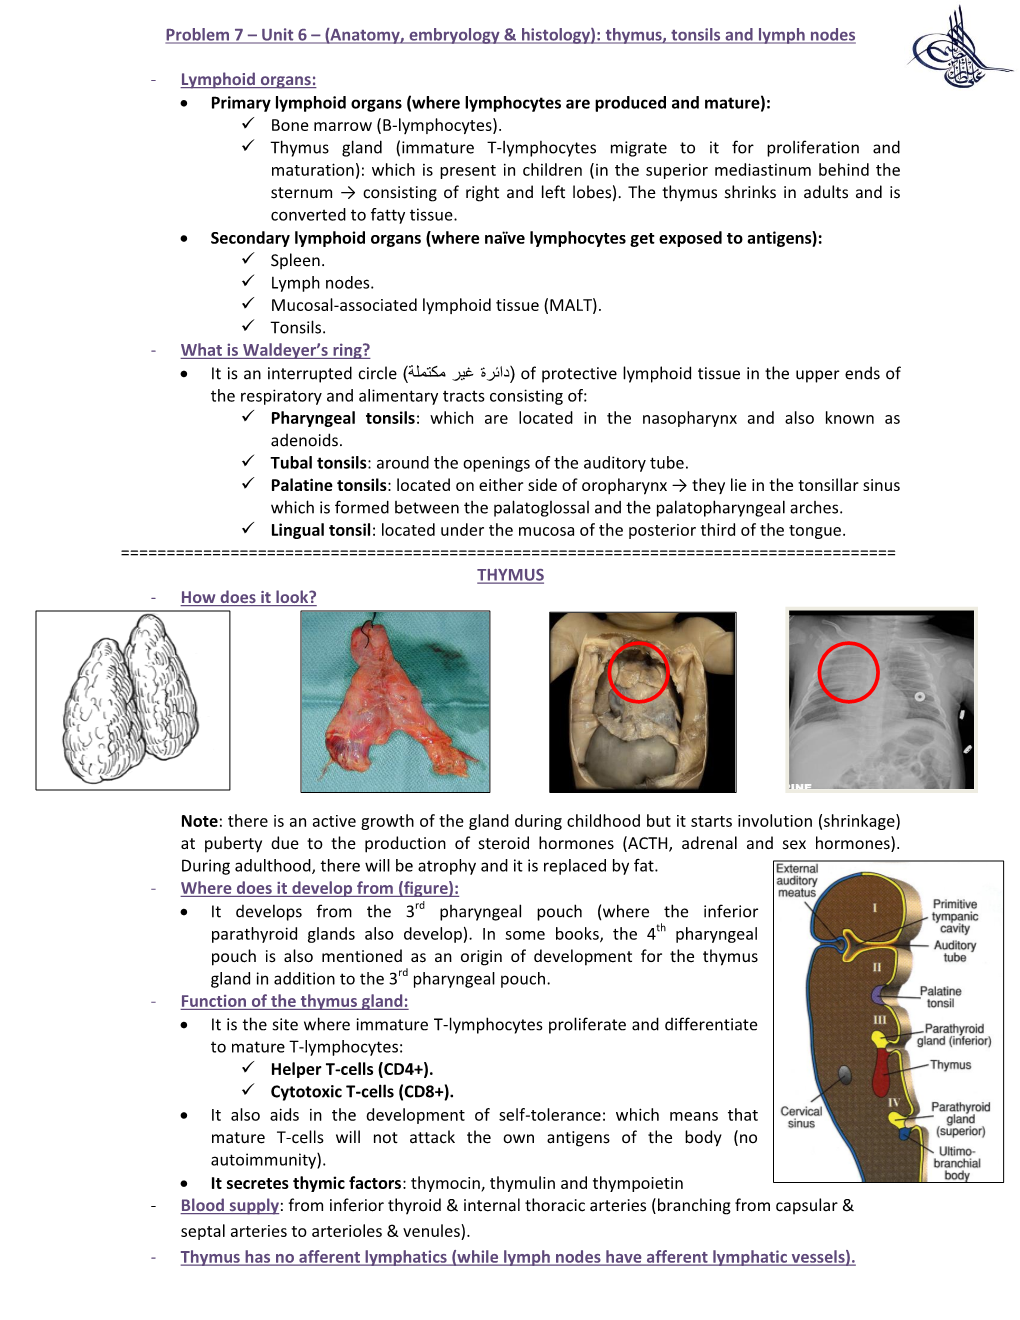 Anatomy, Embryology & Histology